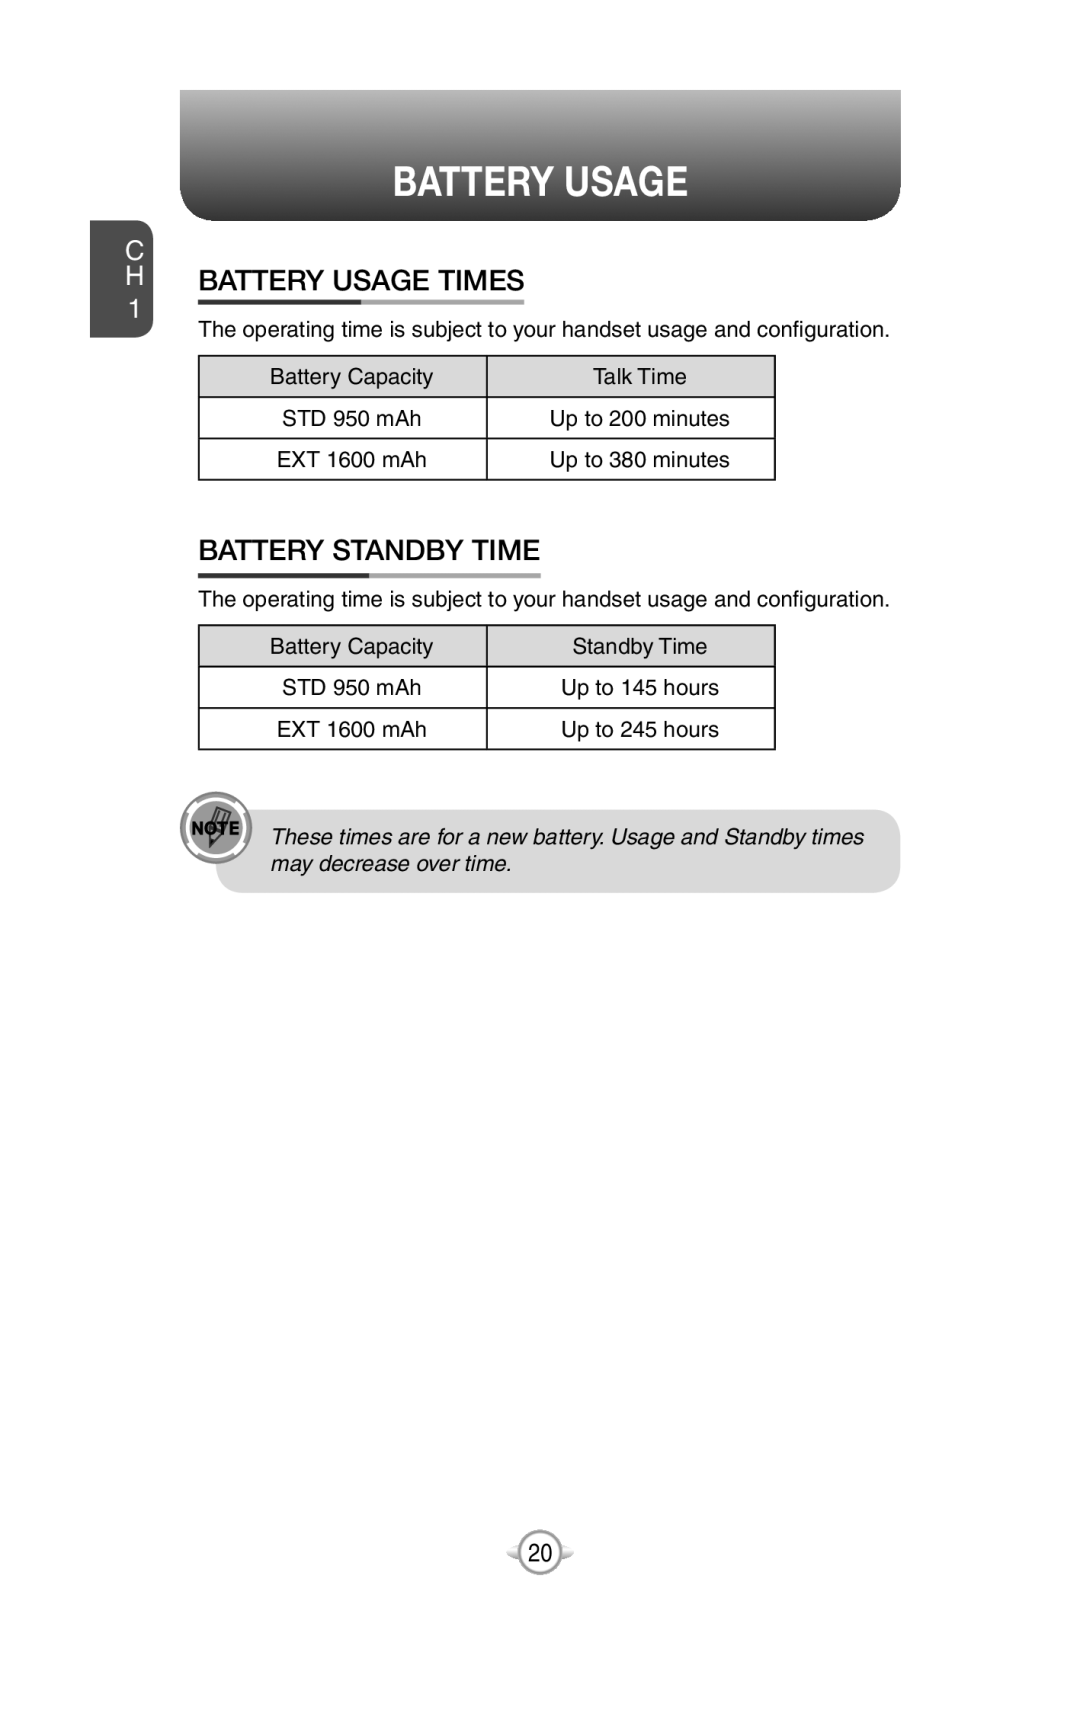 UTStarcom PN-820 user manual H Battery Usage Times, Battery Standby Time 